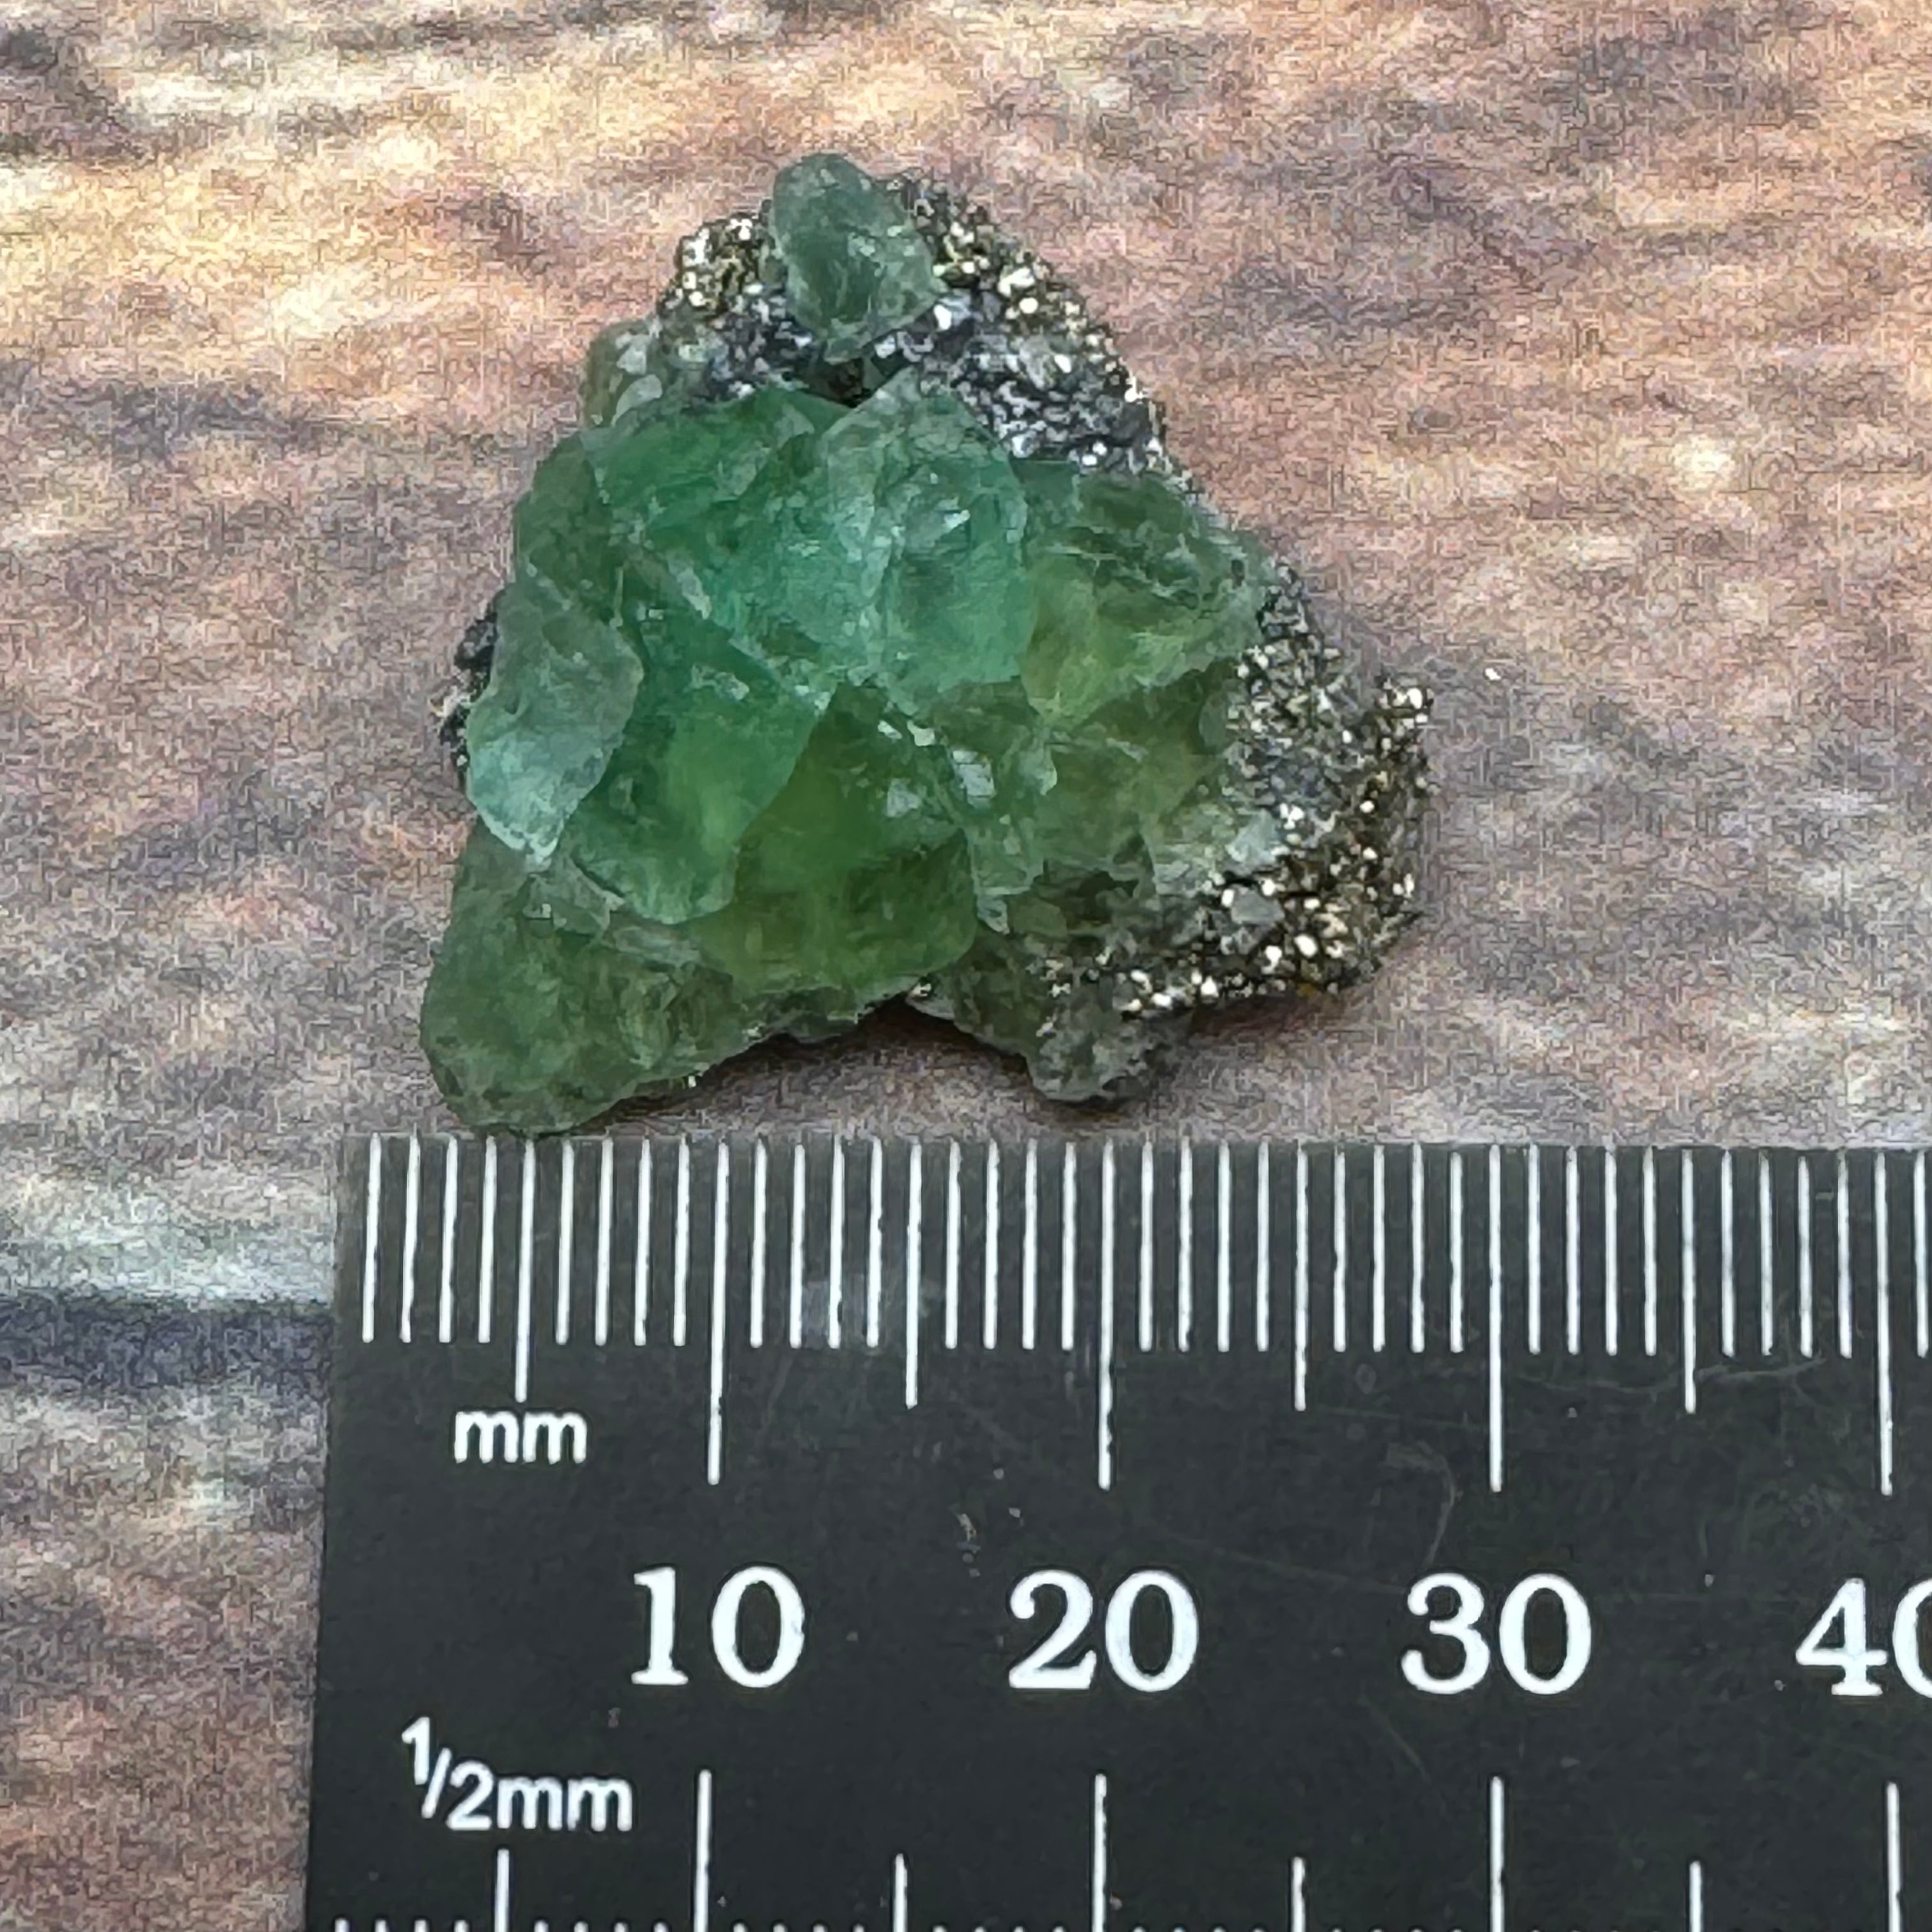 Peruvian Supernatural Green Fluorite - 054